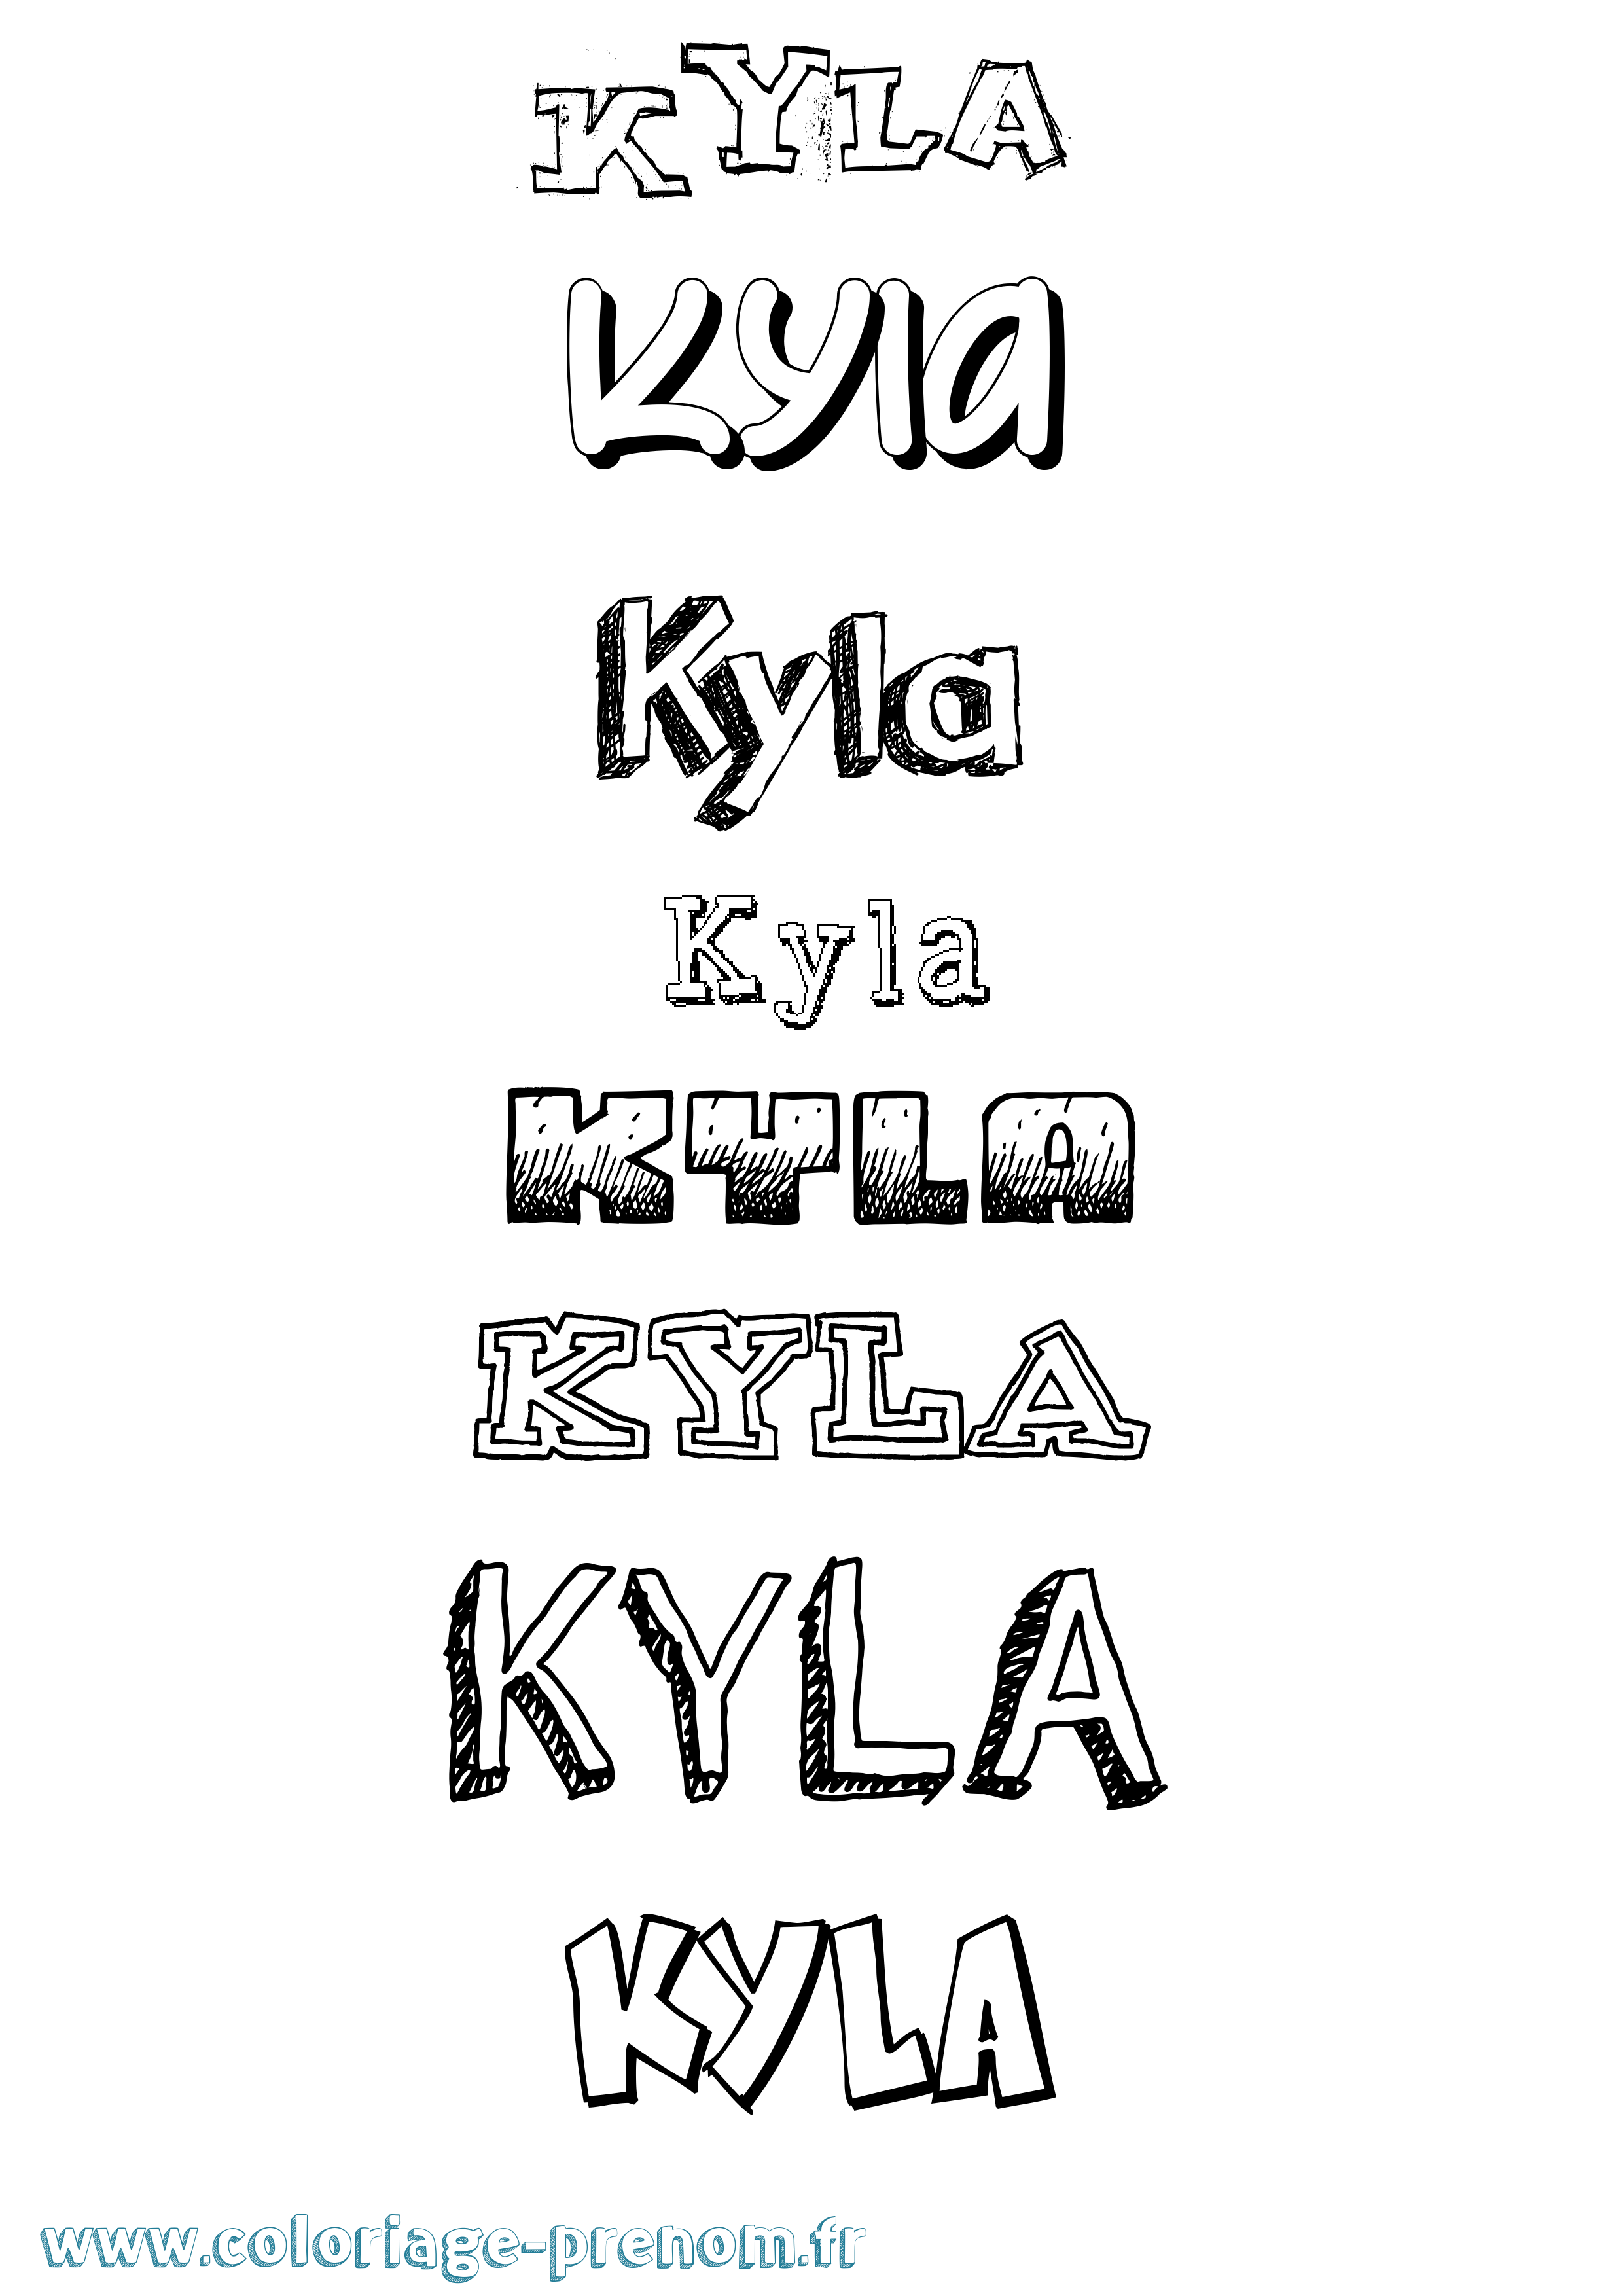 Coloriage prénom Kyla Dessiné